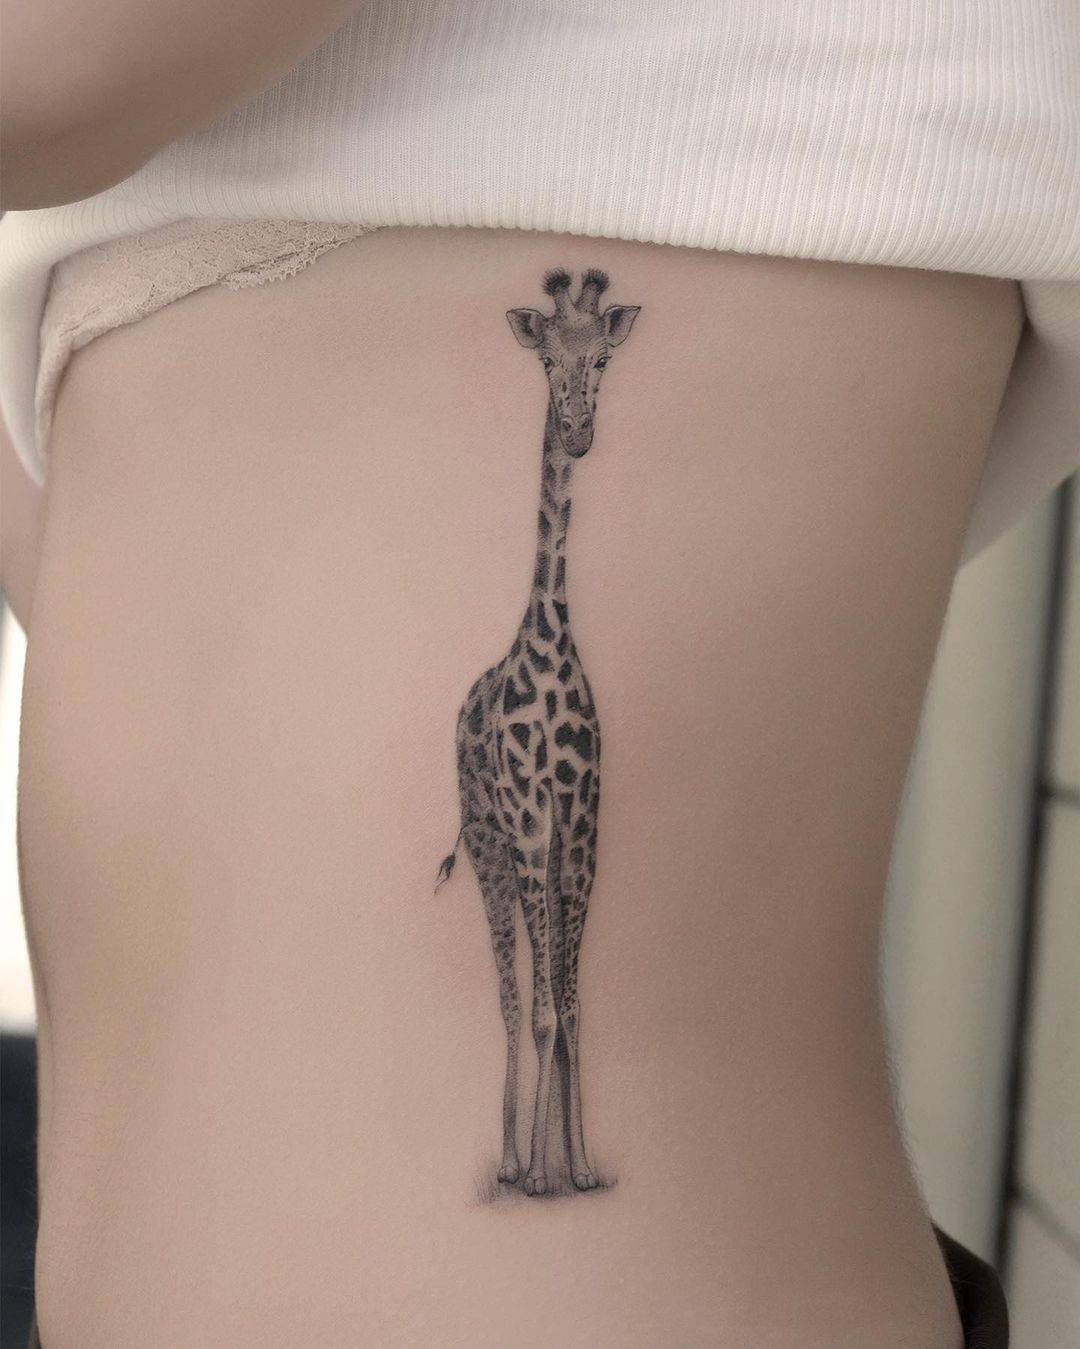 cool 65 Impressive Giraffe Tattoo Ideas - The Designs That Will Make You  Smile Check more at http://stylemann.com/best-giraffe-tattoo-ideas/